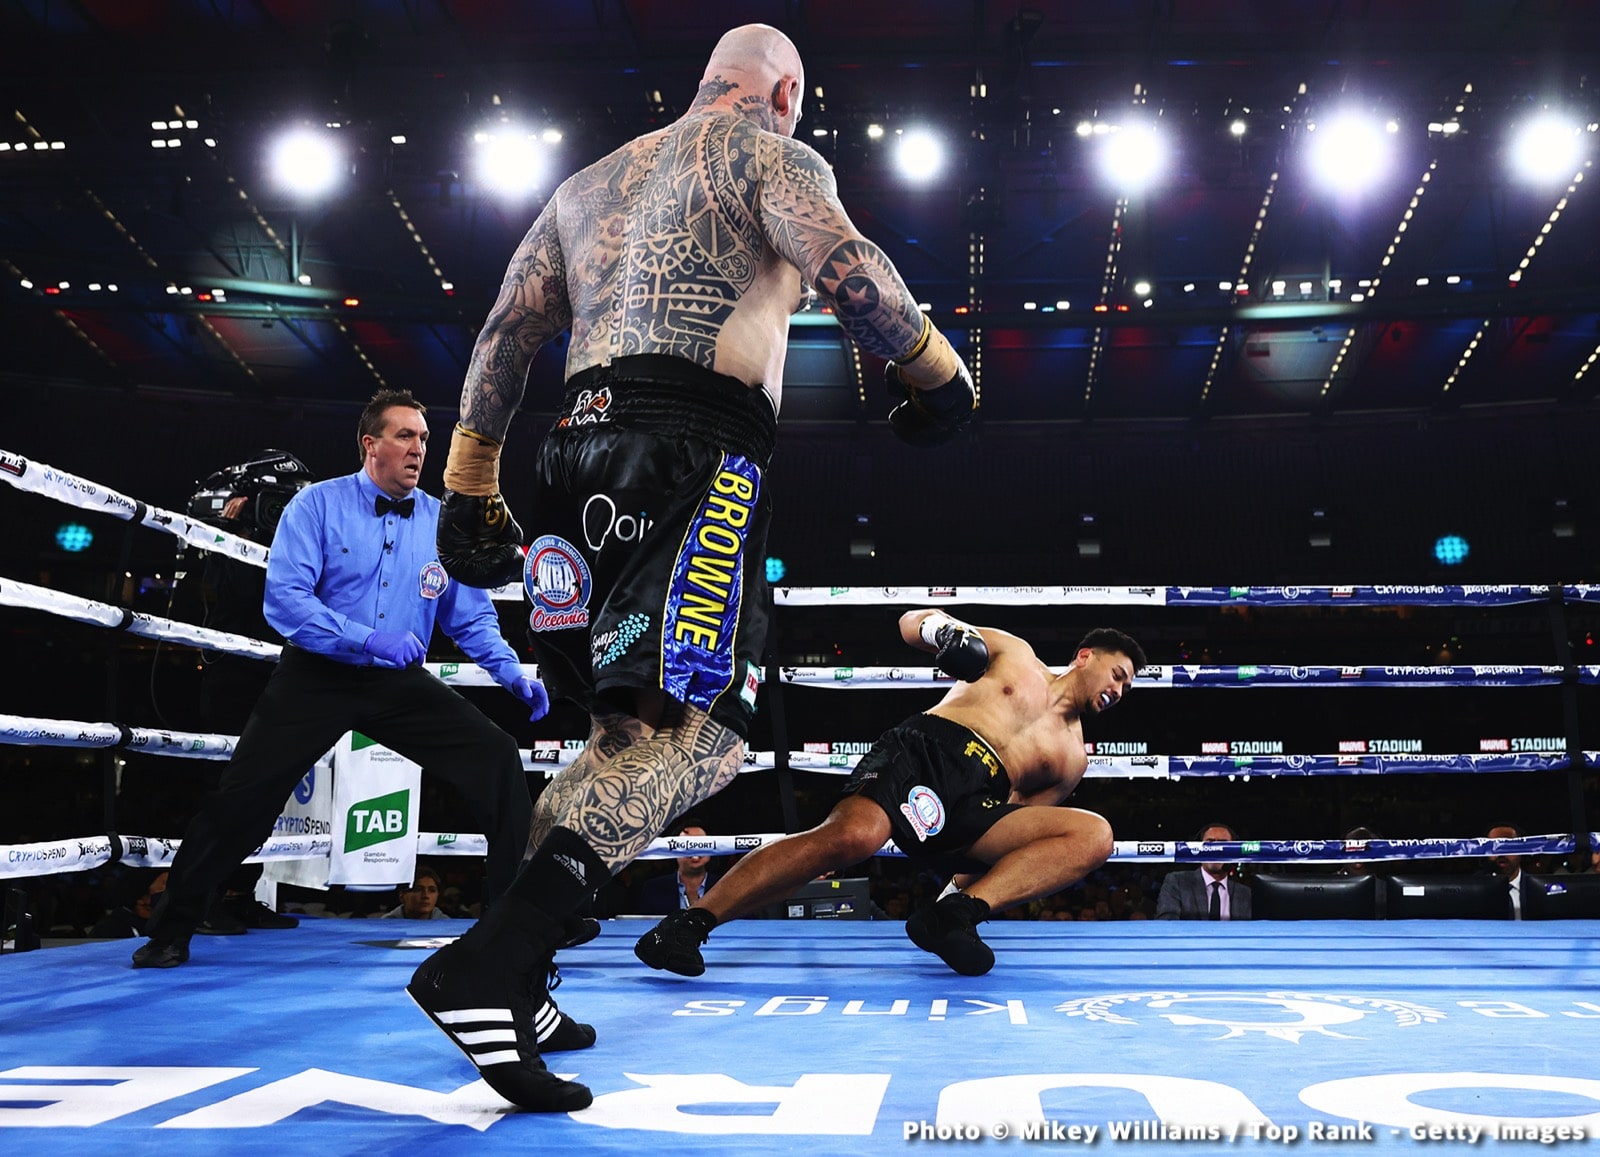 Lucas Browne boxing image / photo